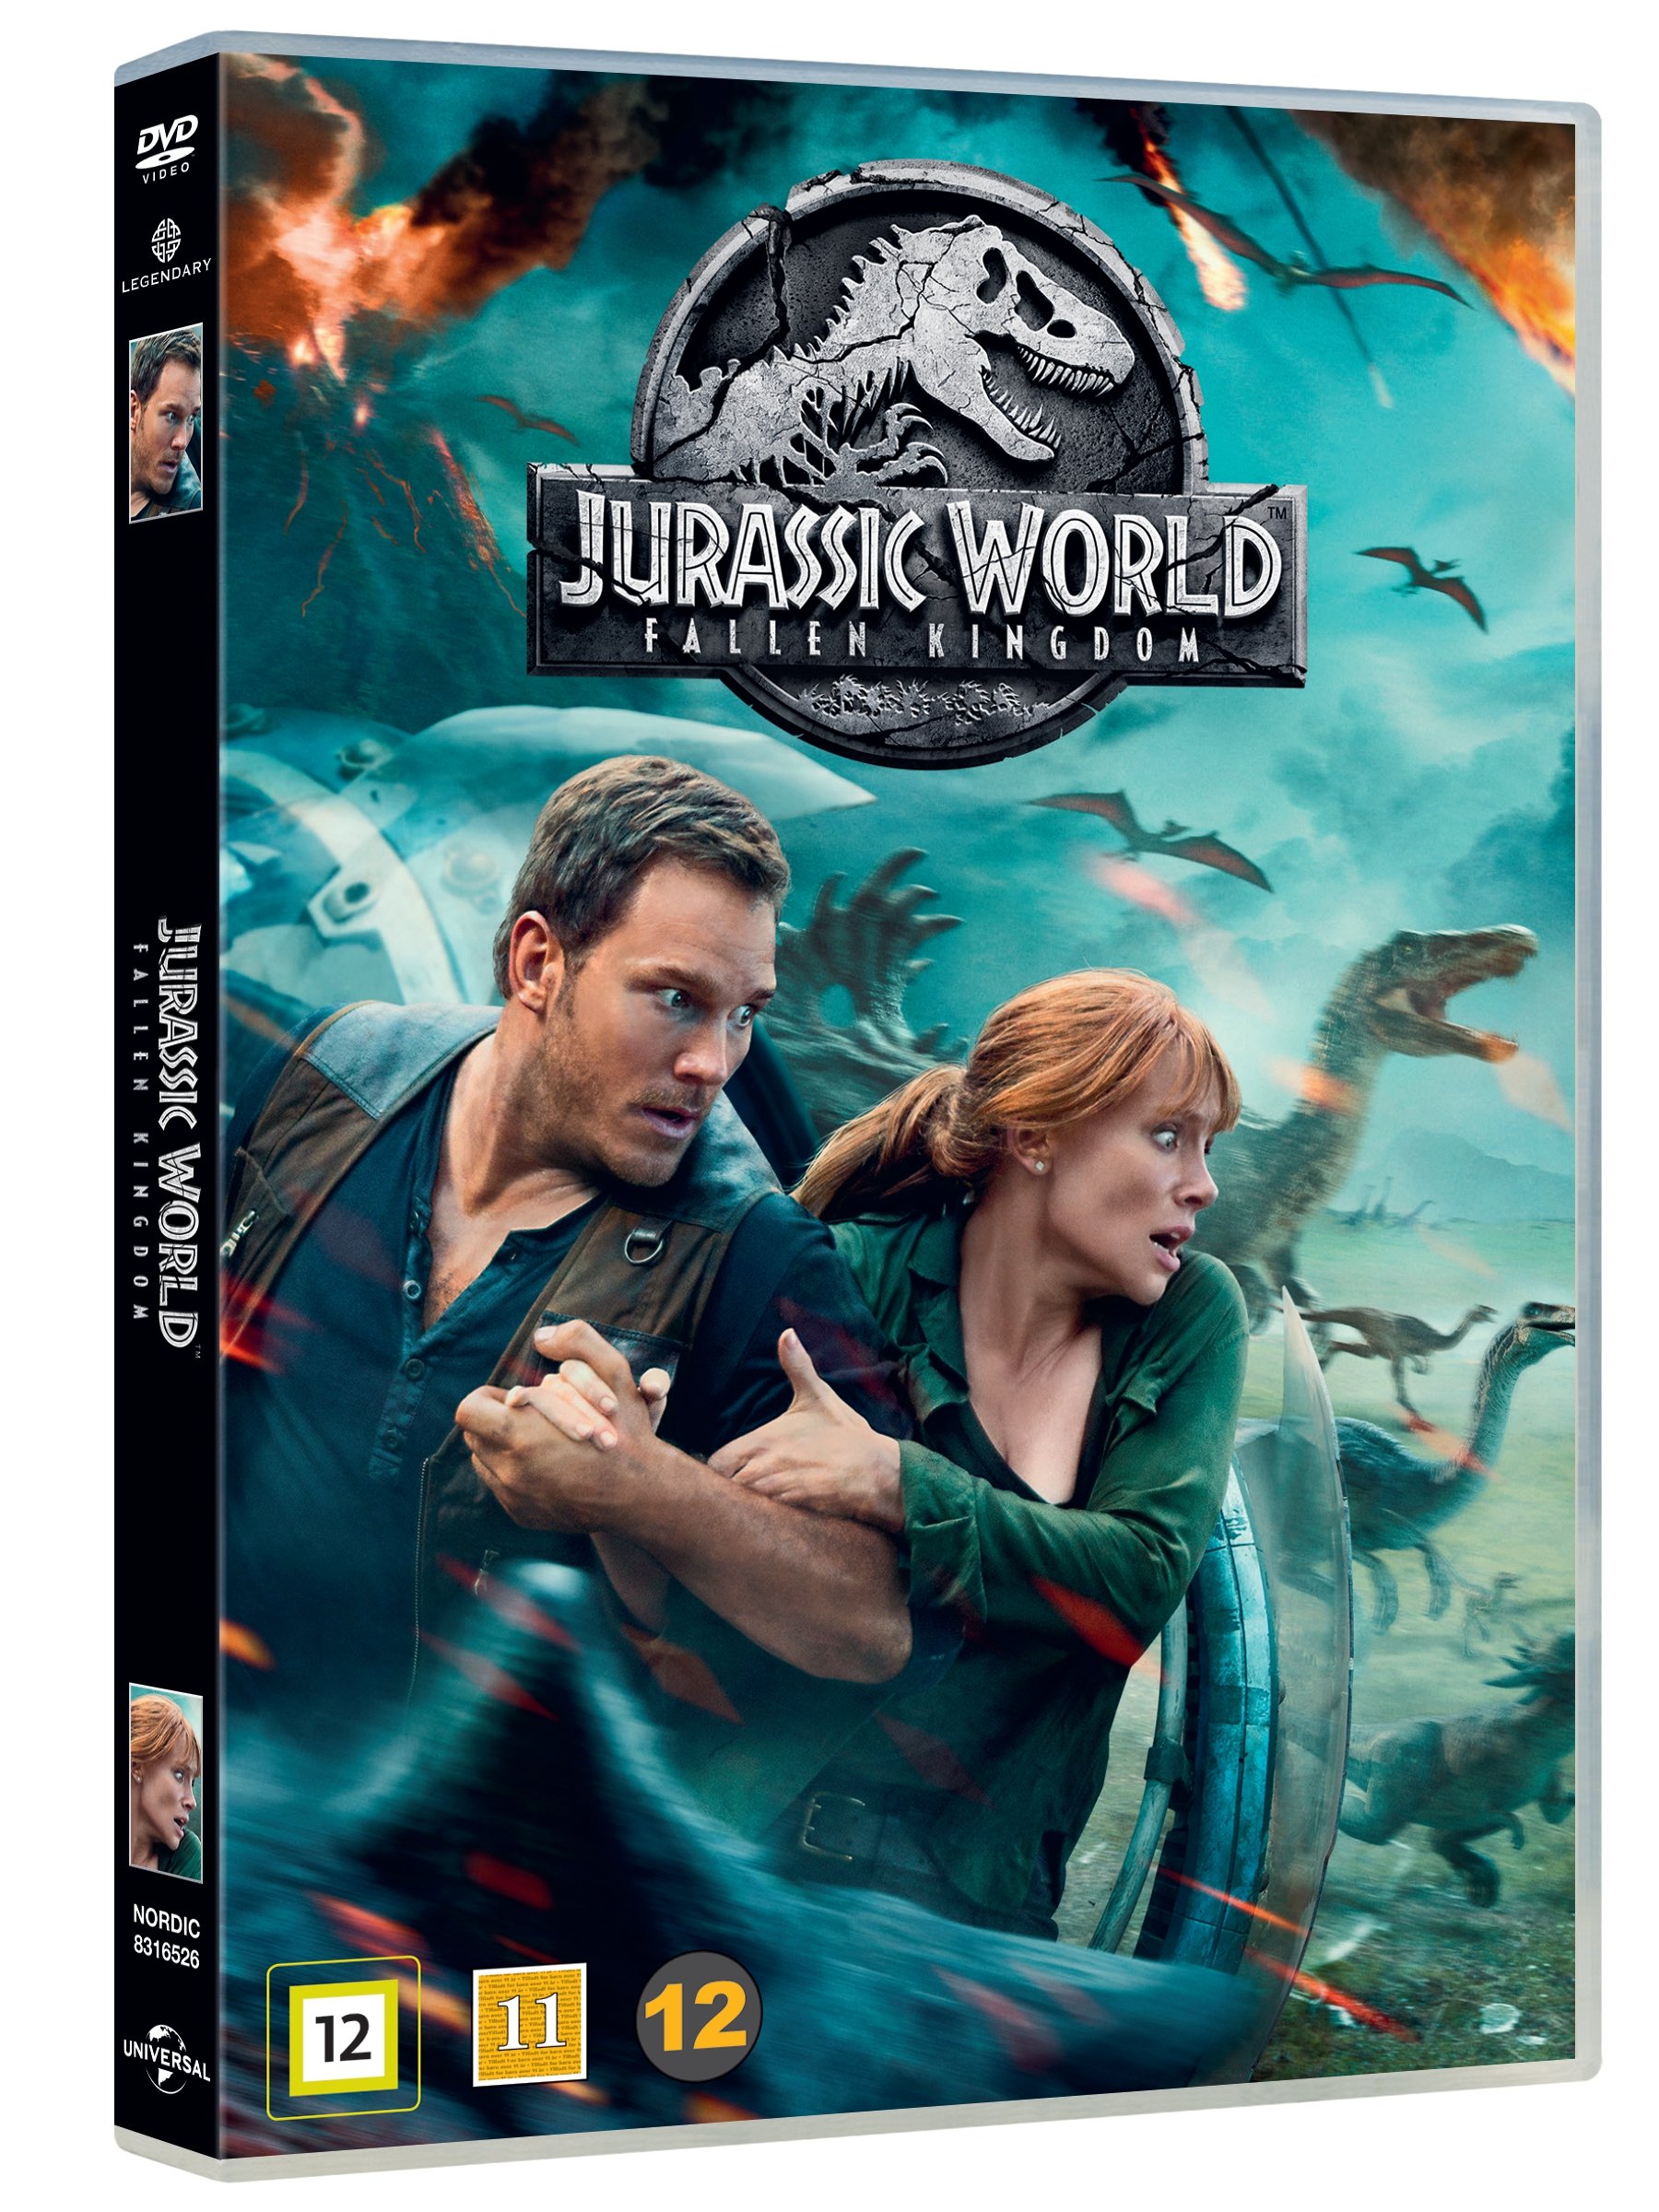 Jurassic World: Fallen Kingdom download the new version for ipod